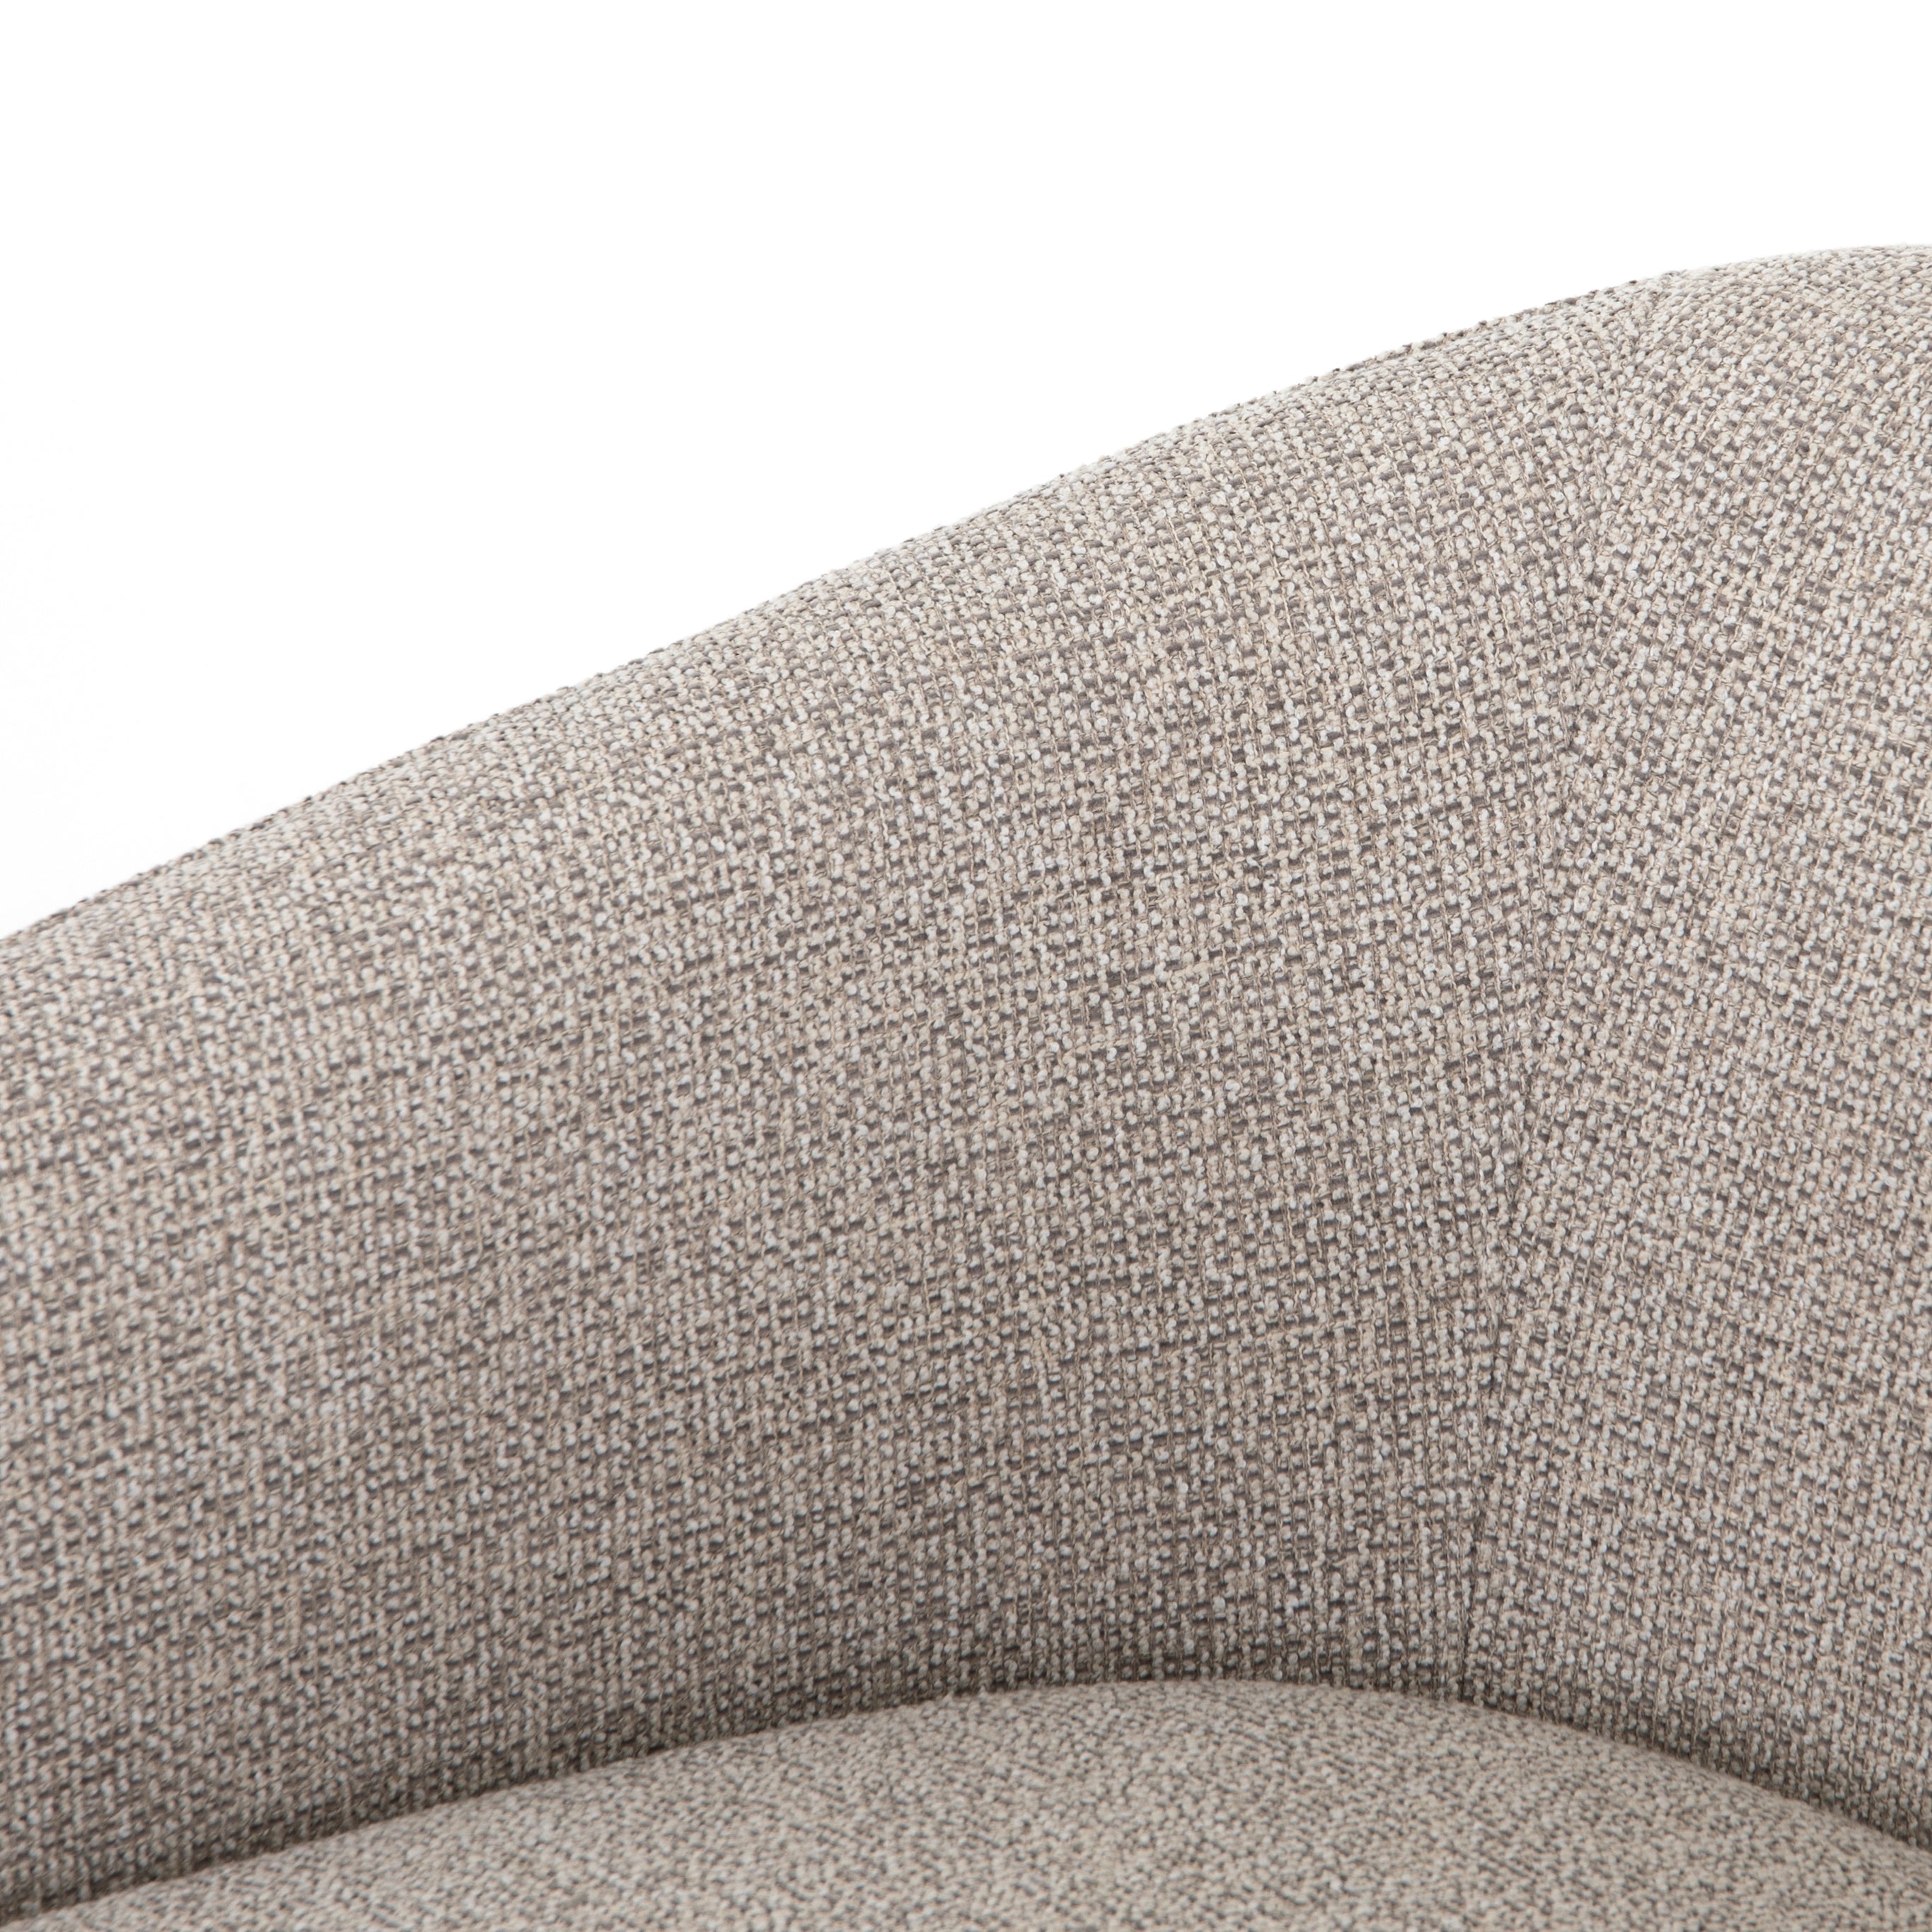 Bellamy Storm Fabric | Fae Chair | Valley Ridge Furniture